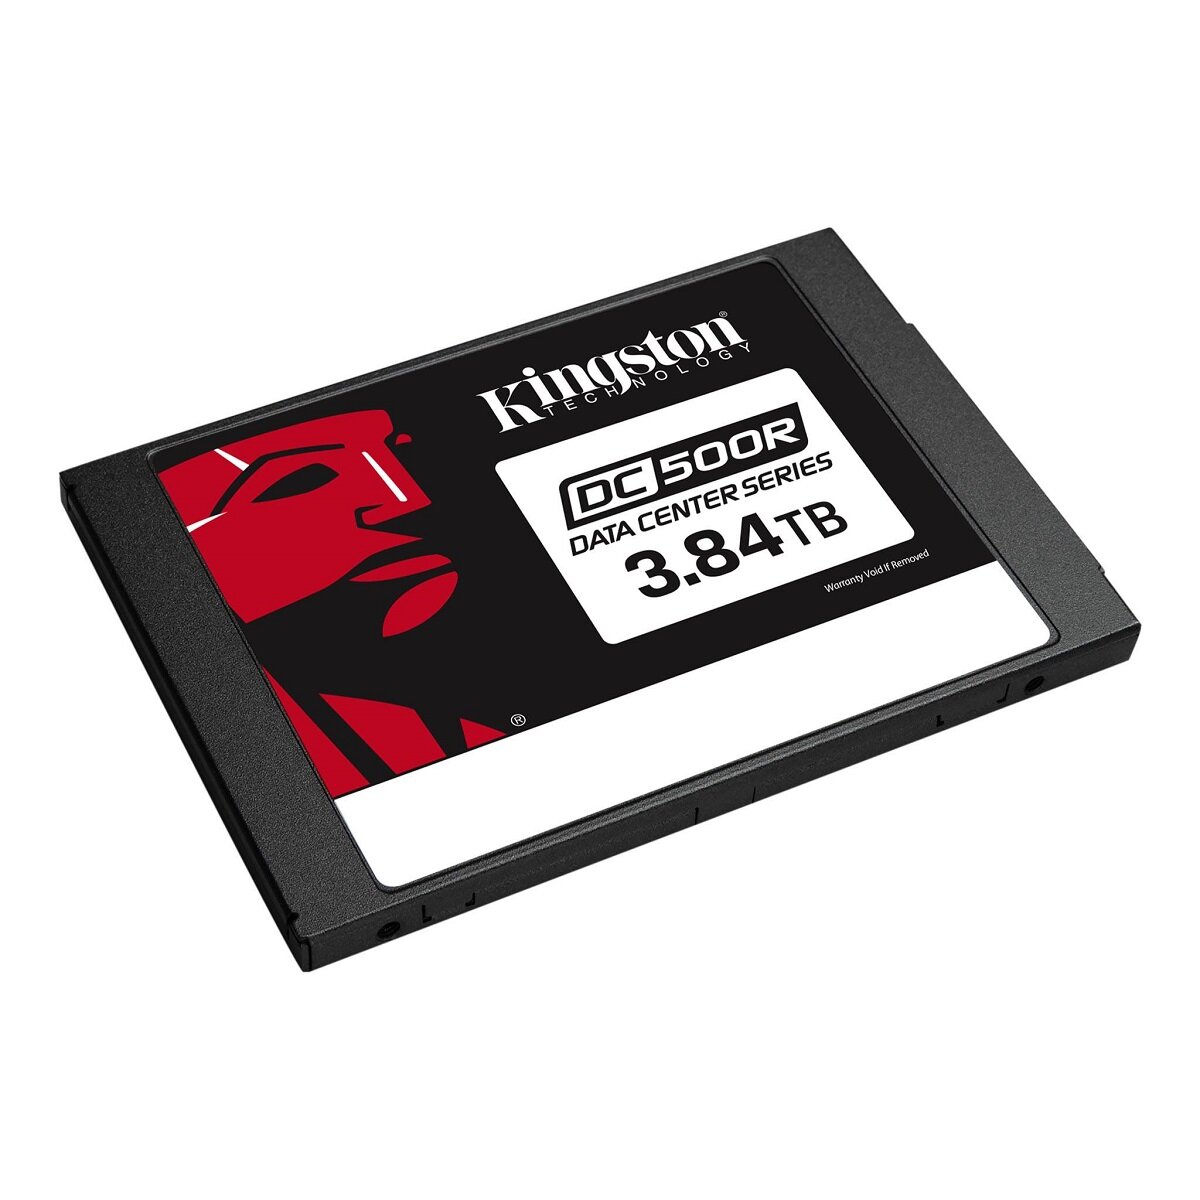 Dysk SSD Kingston DC500R 3840GB 2.5” widok dysku pod skosem